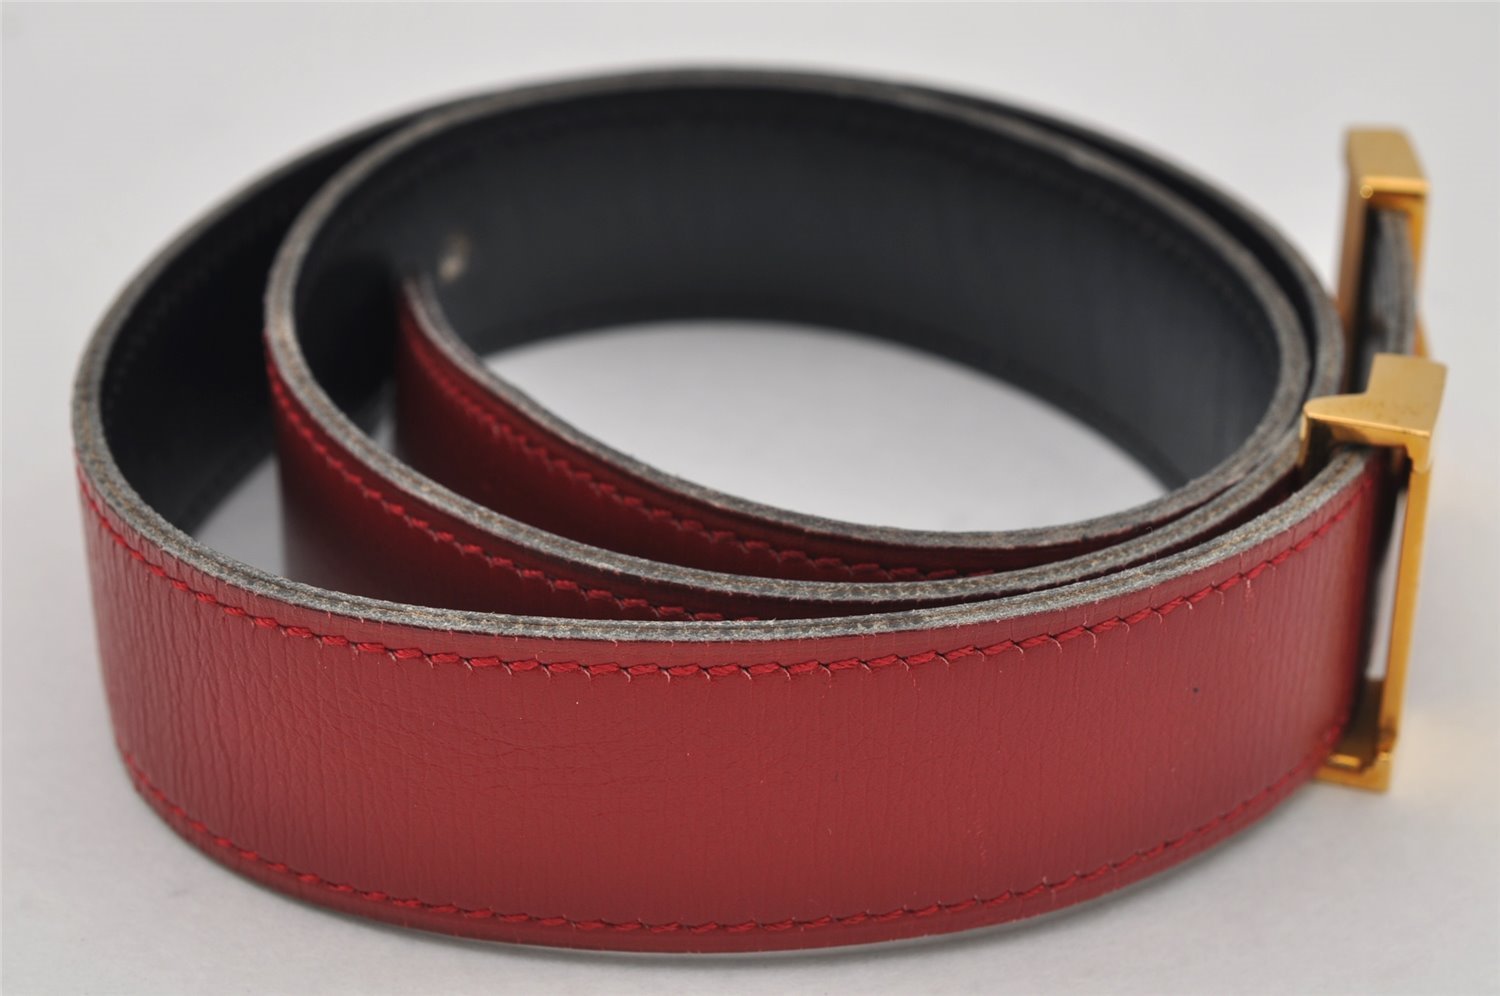 Authentic HERMES Constance Leather Belt Size 25.6-27.2